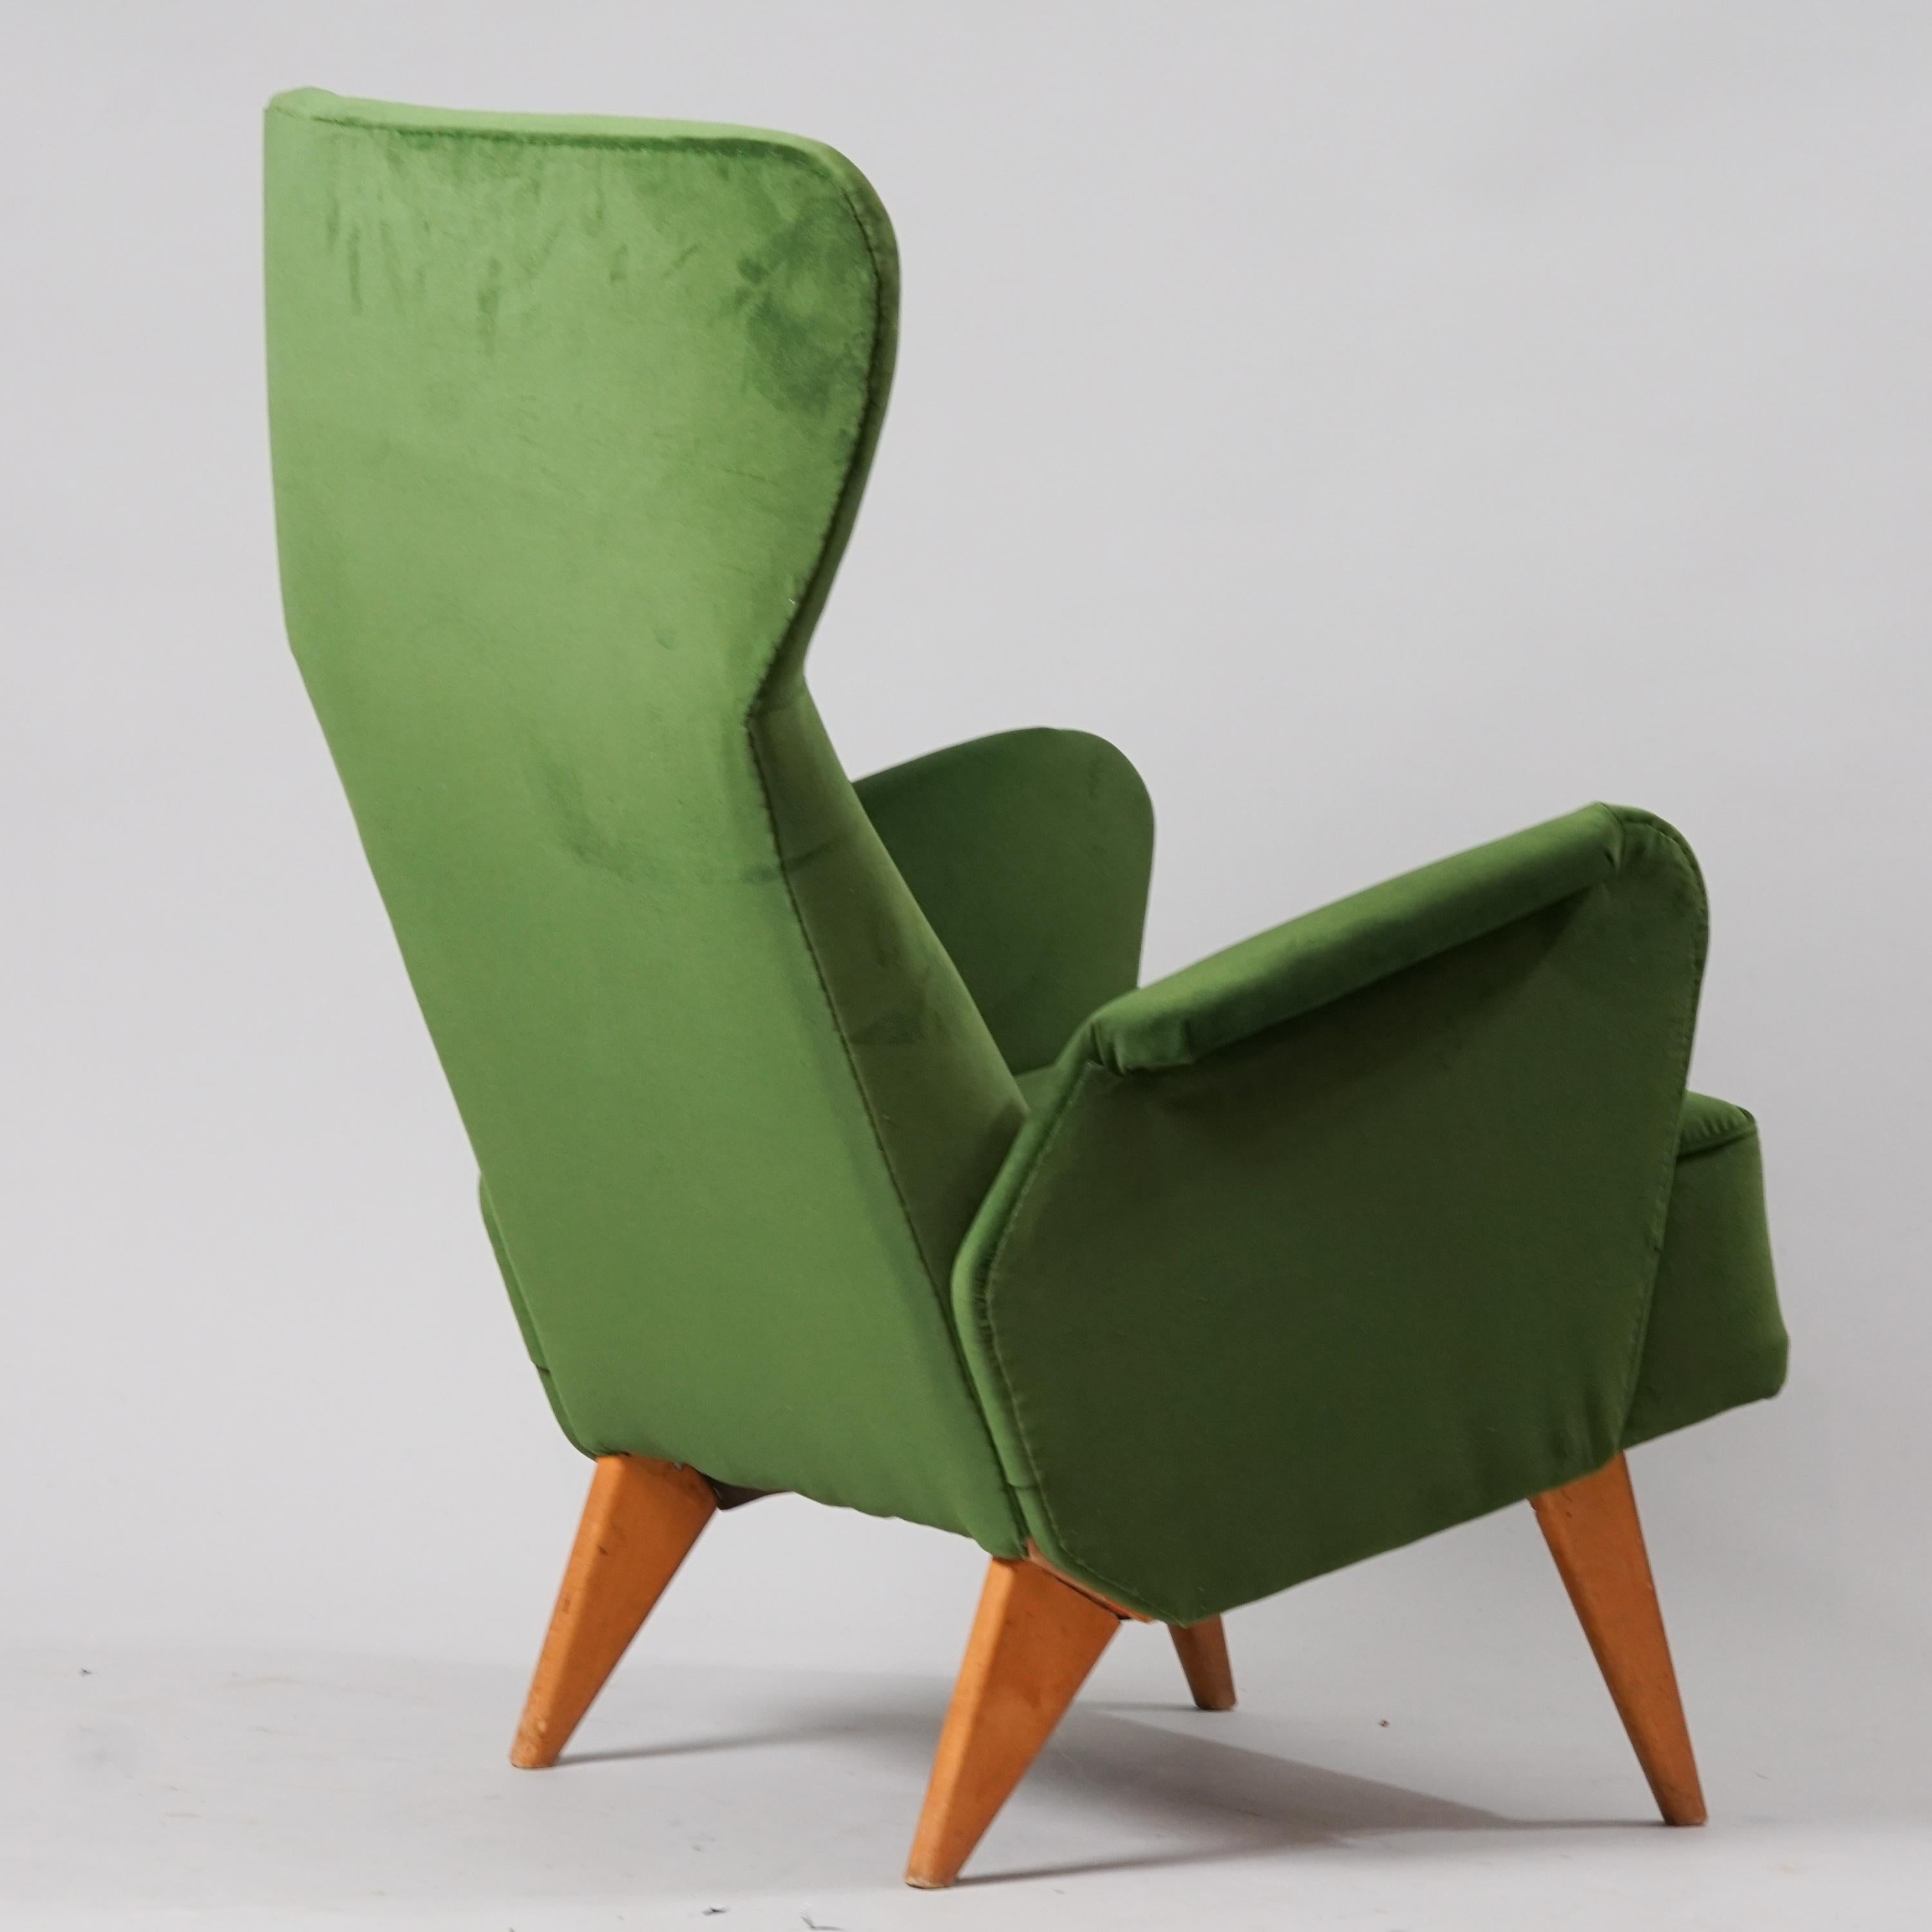 Scandinavian Modern Lounge Chair, Carl Gustaf Hiort af Ornäs, Hiort tuote, 1950/1960s  For Sale